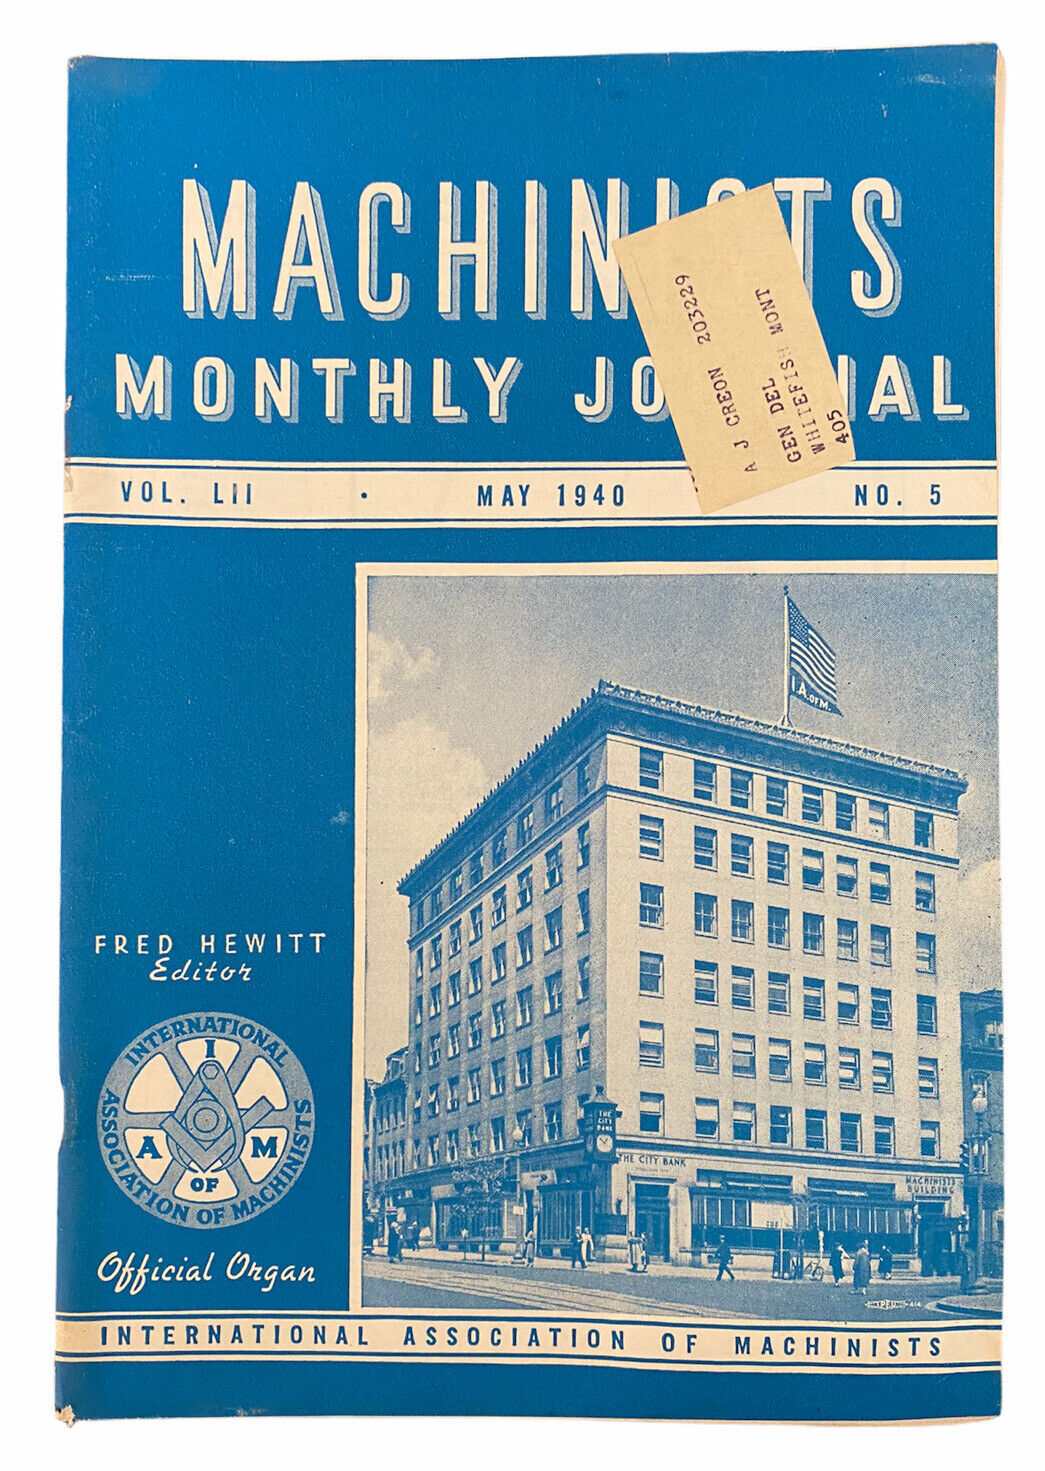 International Association of Machinists Monthly Journal Magazine May 1940